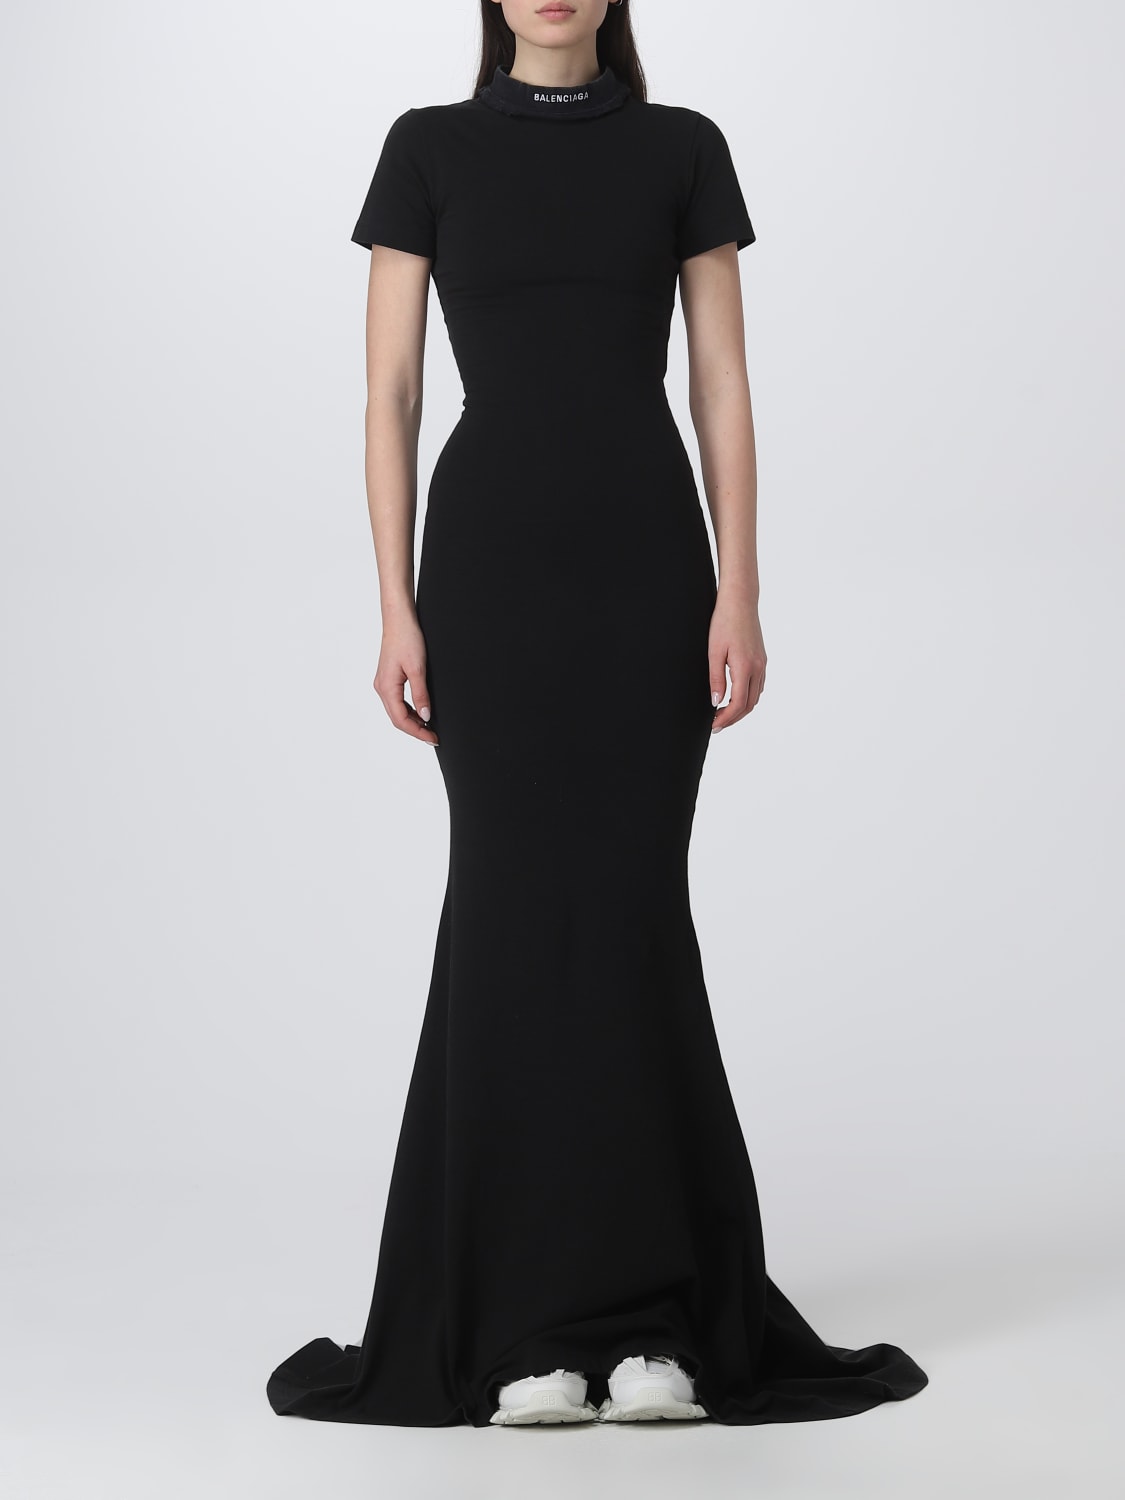 BALENCIAGA: for woman Black | Balenciaga dress 744730 TOVR9 online on